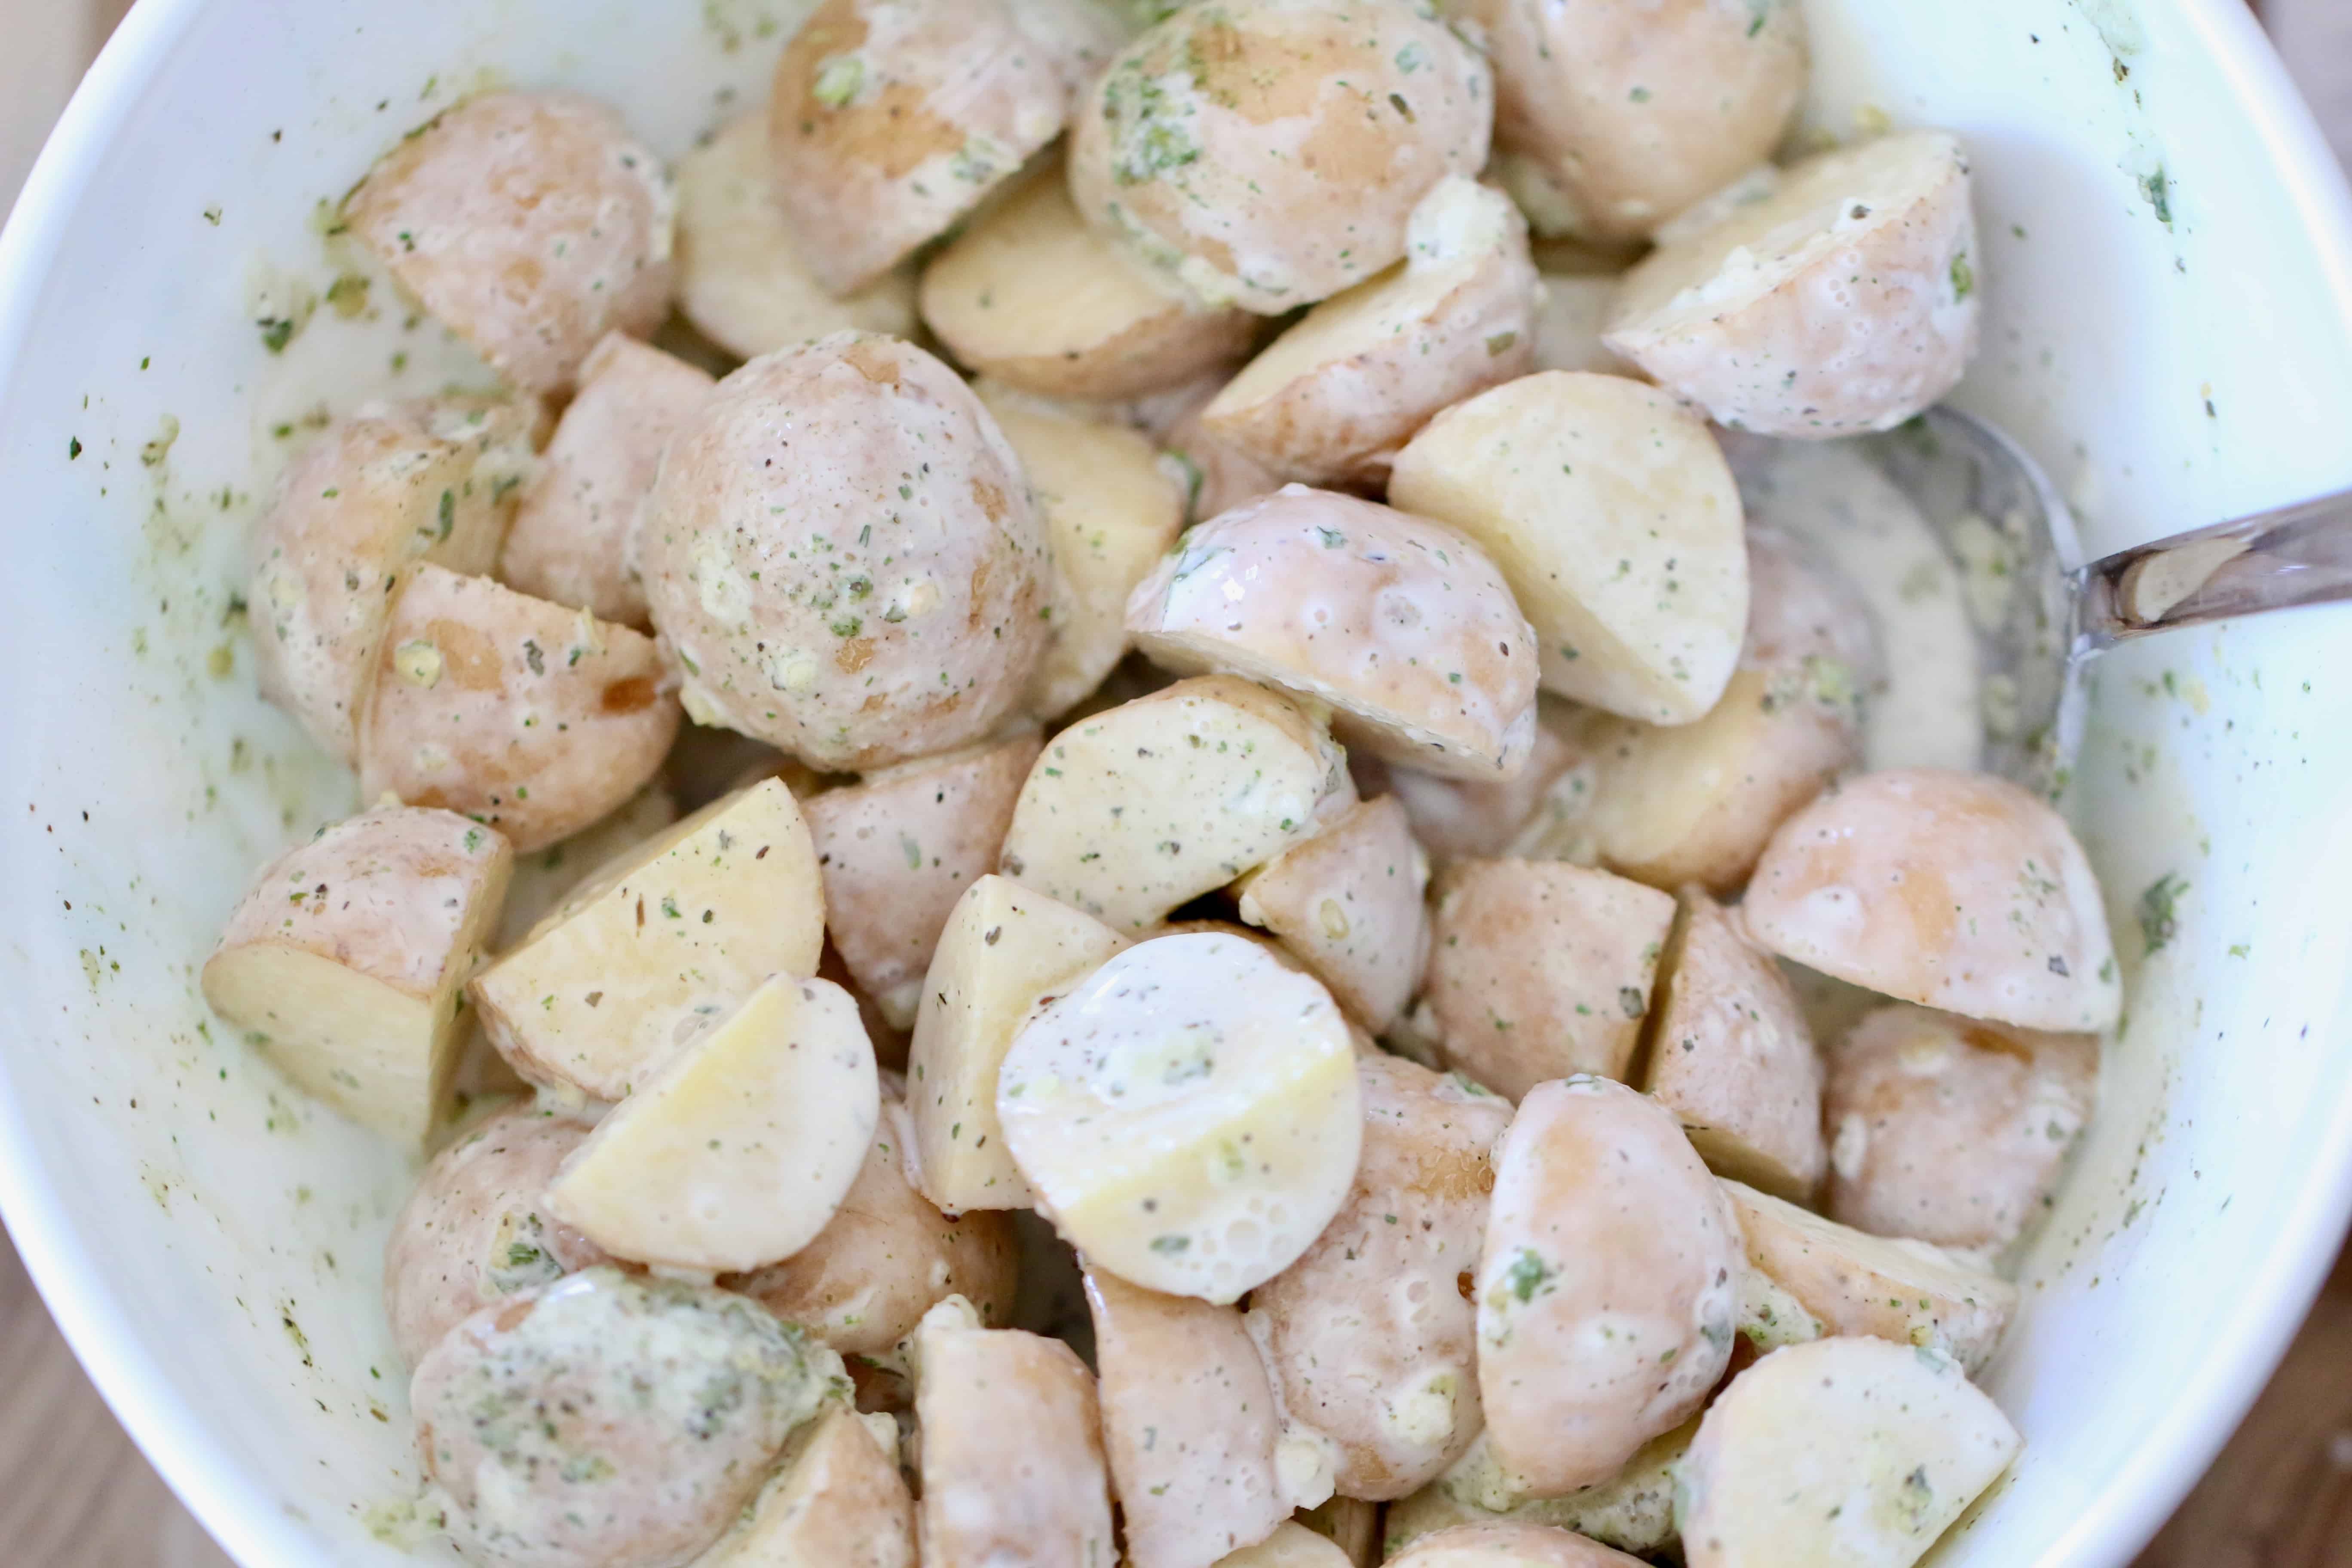 baby potatoes, garlic, onion chive seasoning, ranch seasoning and heavy cream in a bowl.